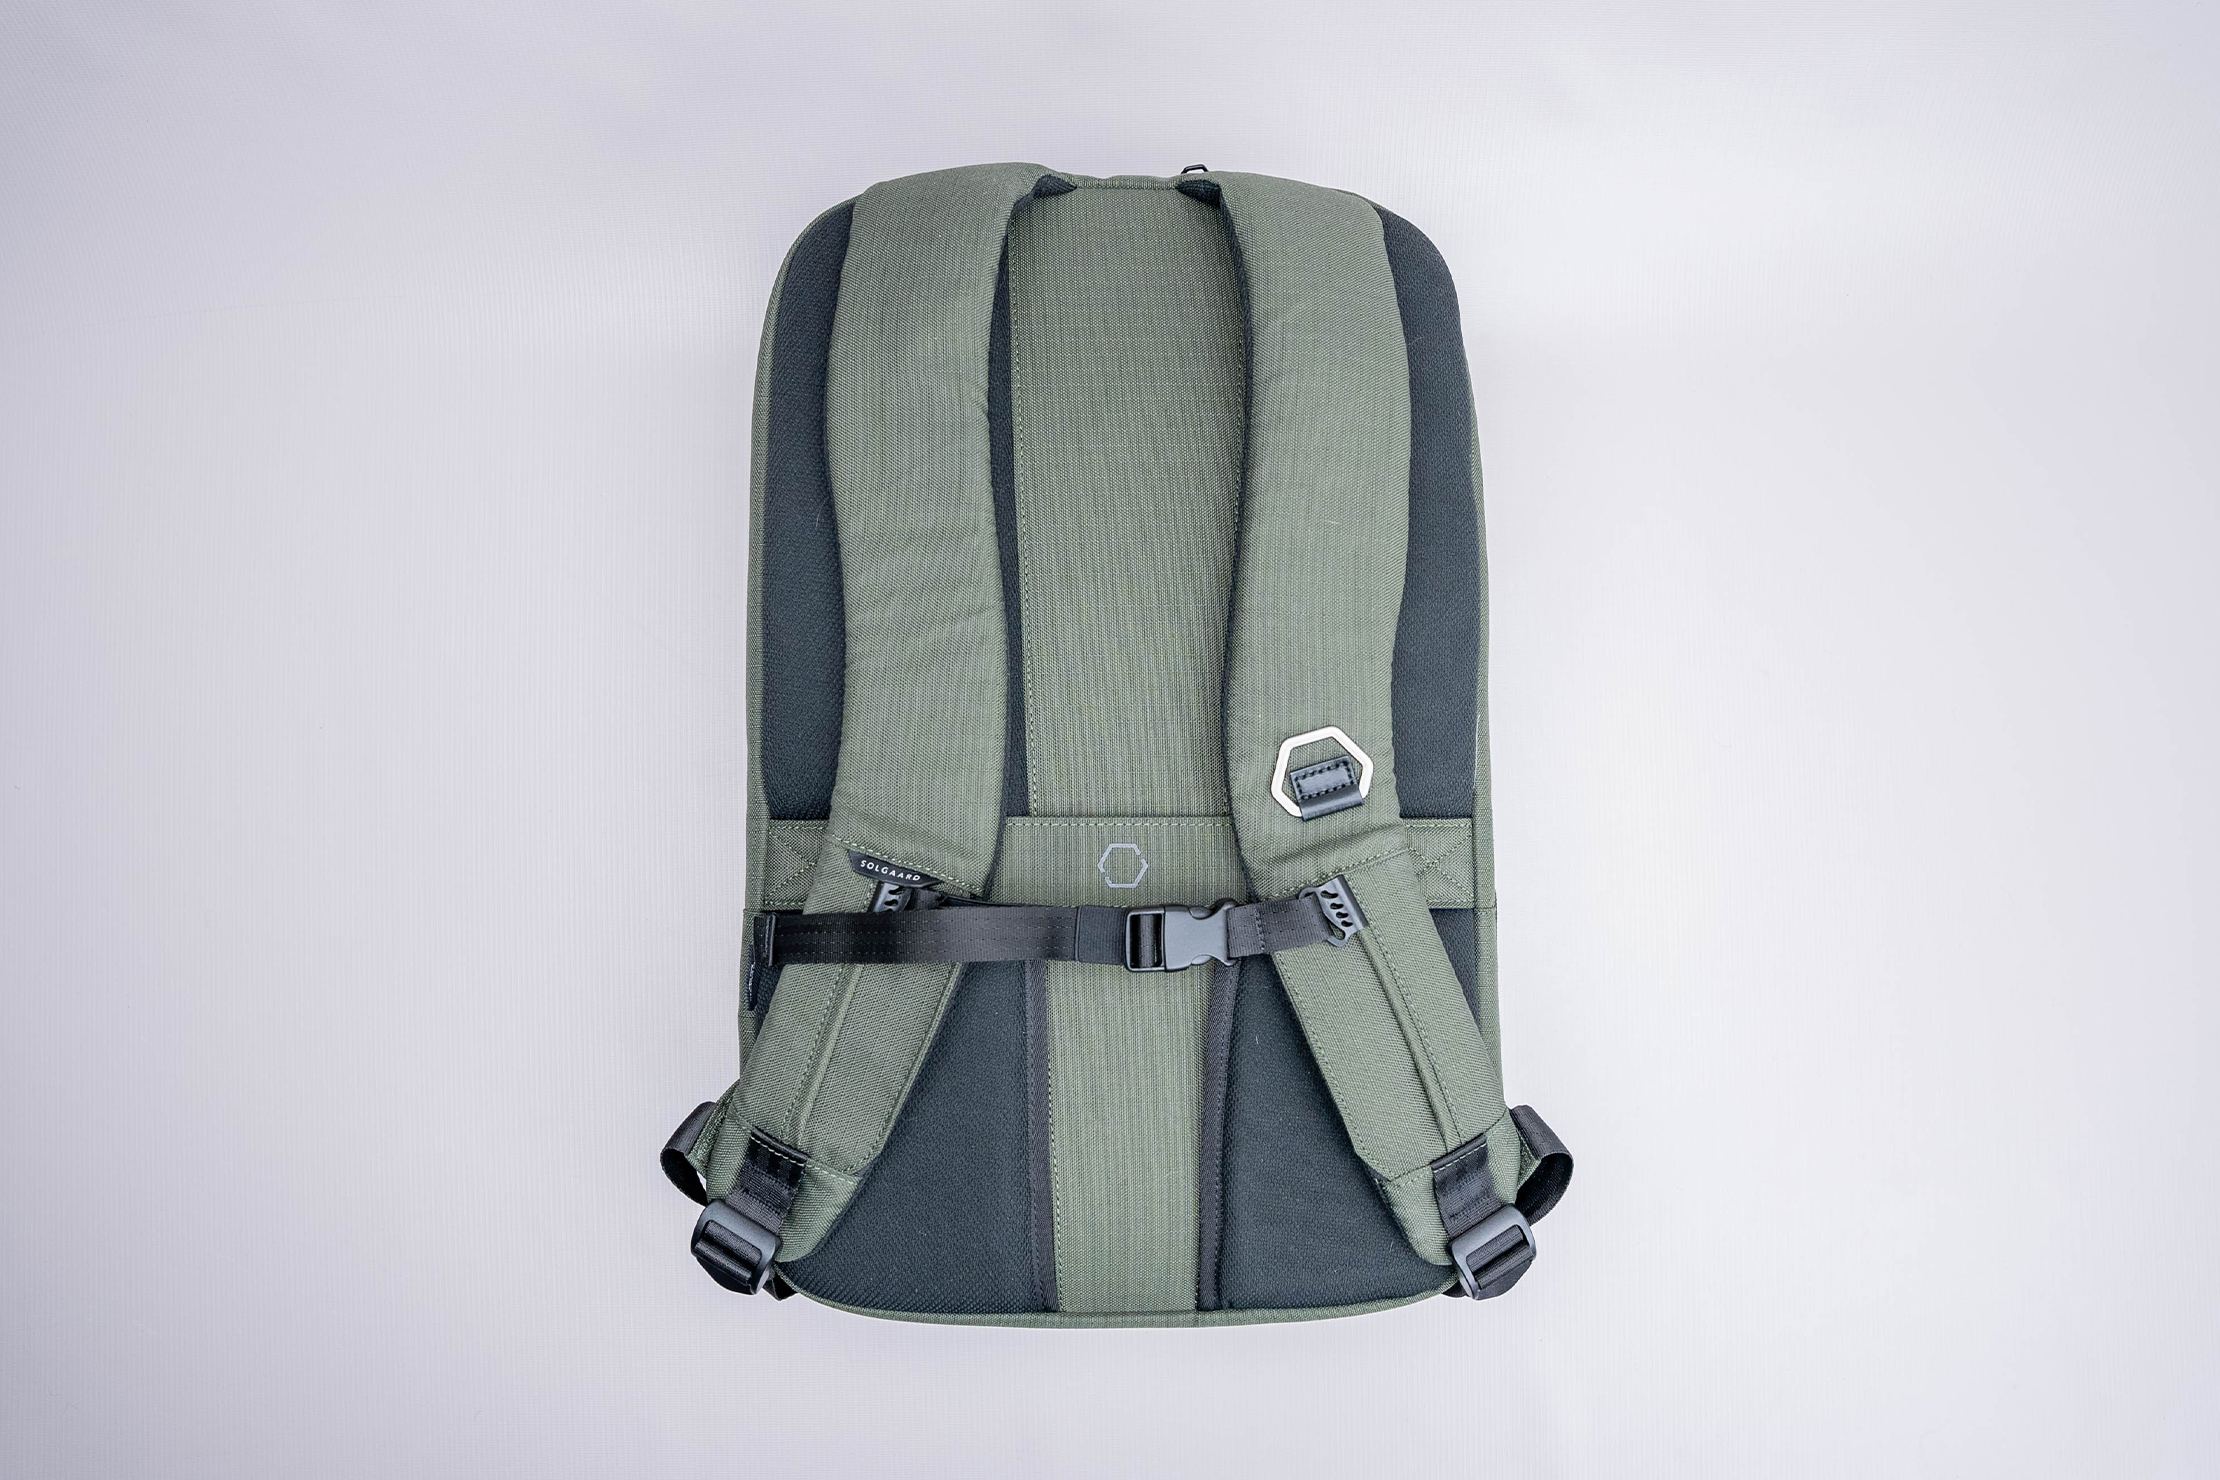 Solgaard Lifepack Endeavor (with closet) Harness